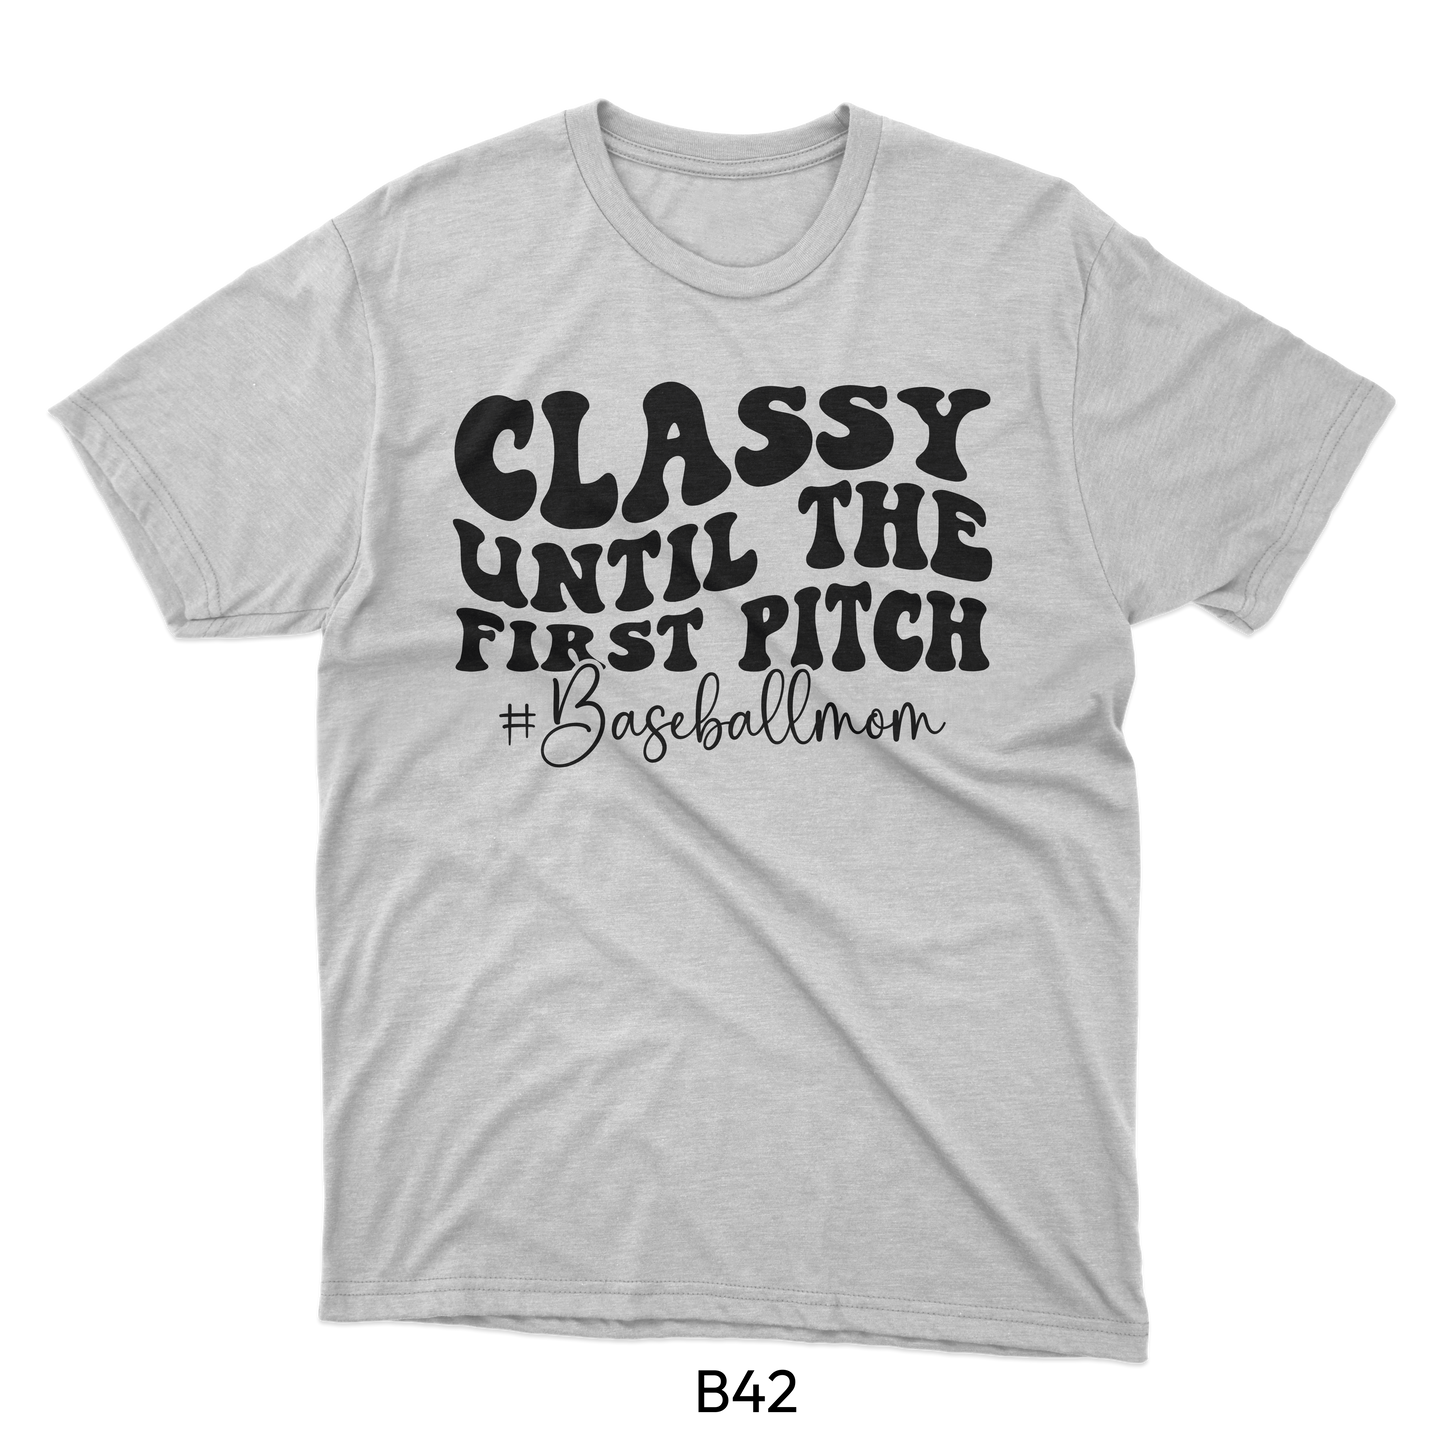 Classy Until The First Pitch #BaseballMom - Baseball Design (B42)